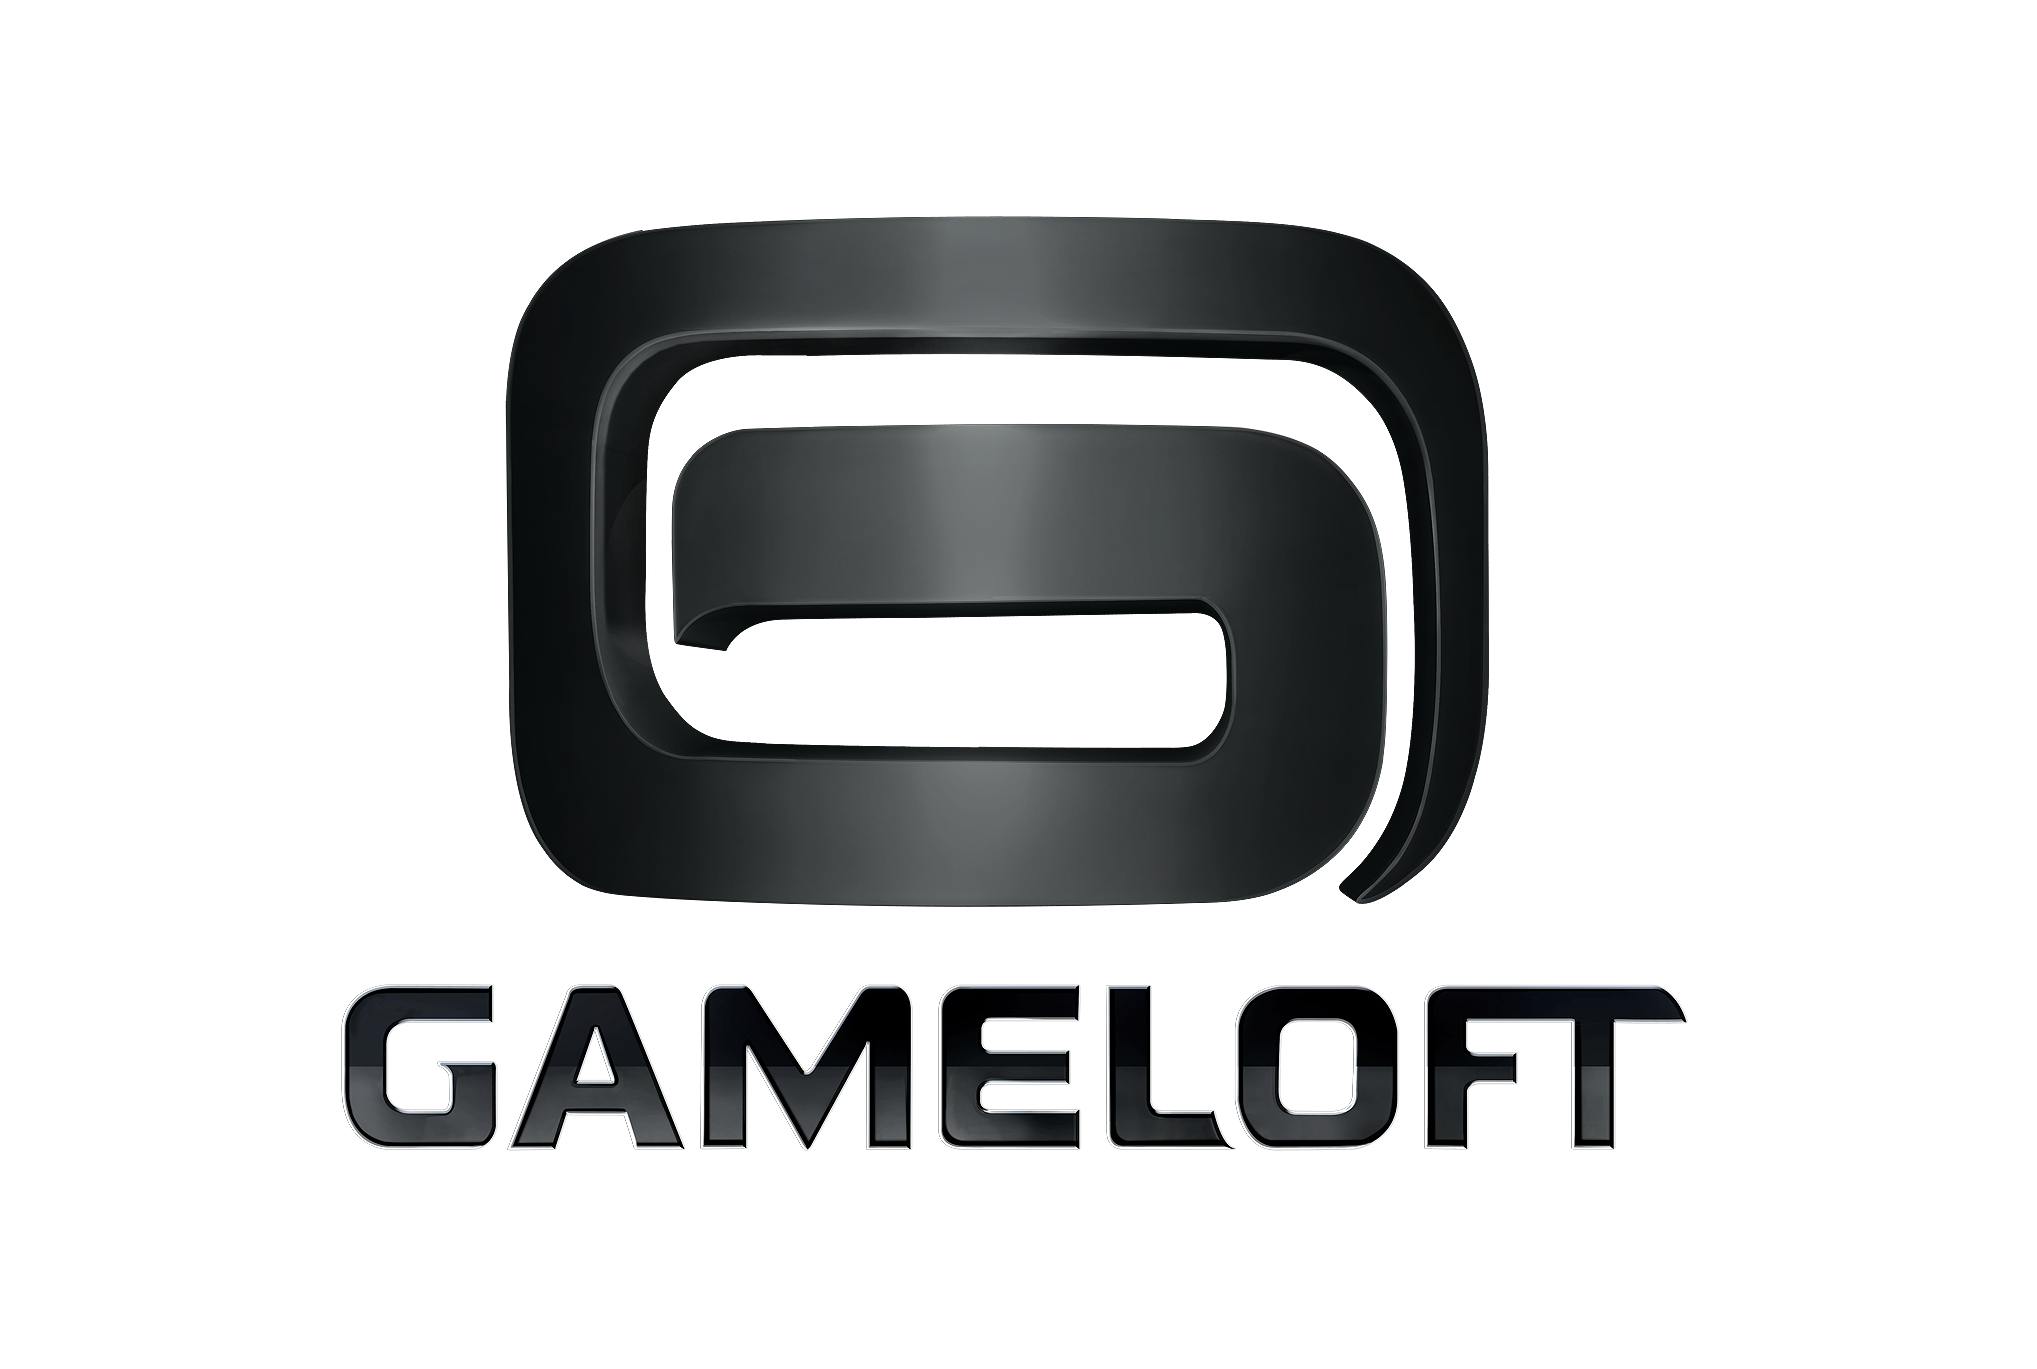 logo gameloft